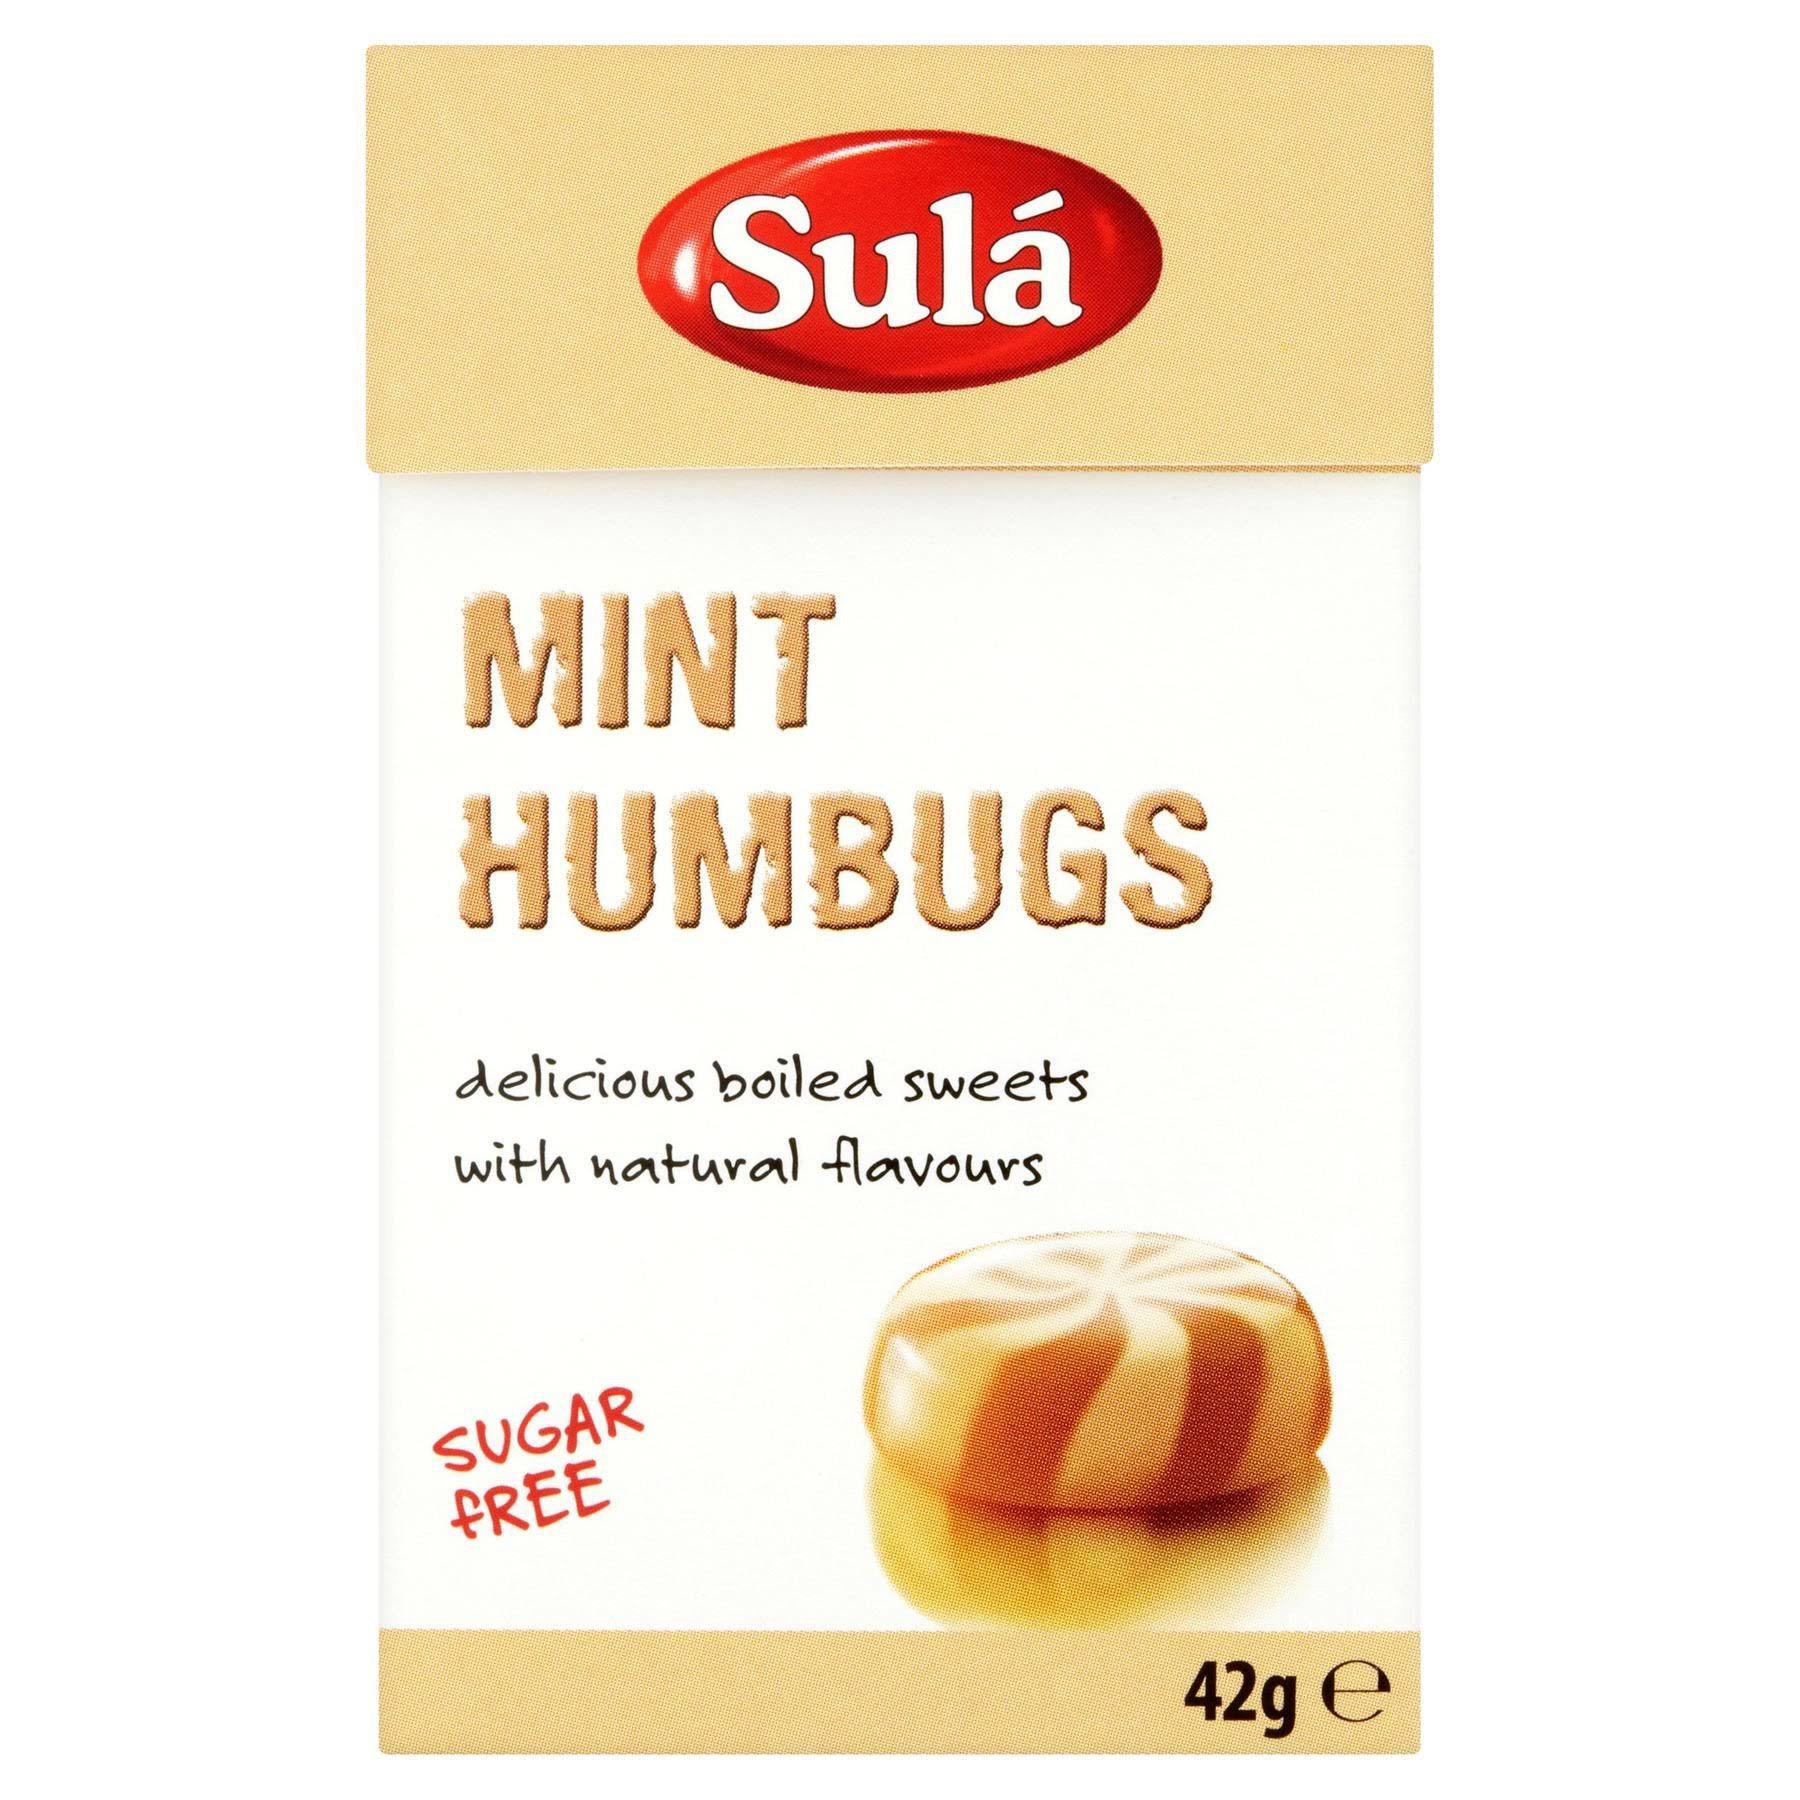 Sula Sugar Sweets Humbugs Candy - Mint, 42g